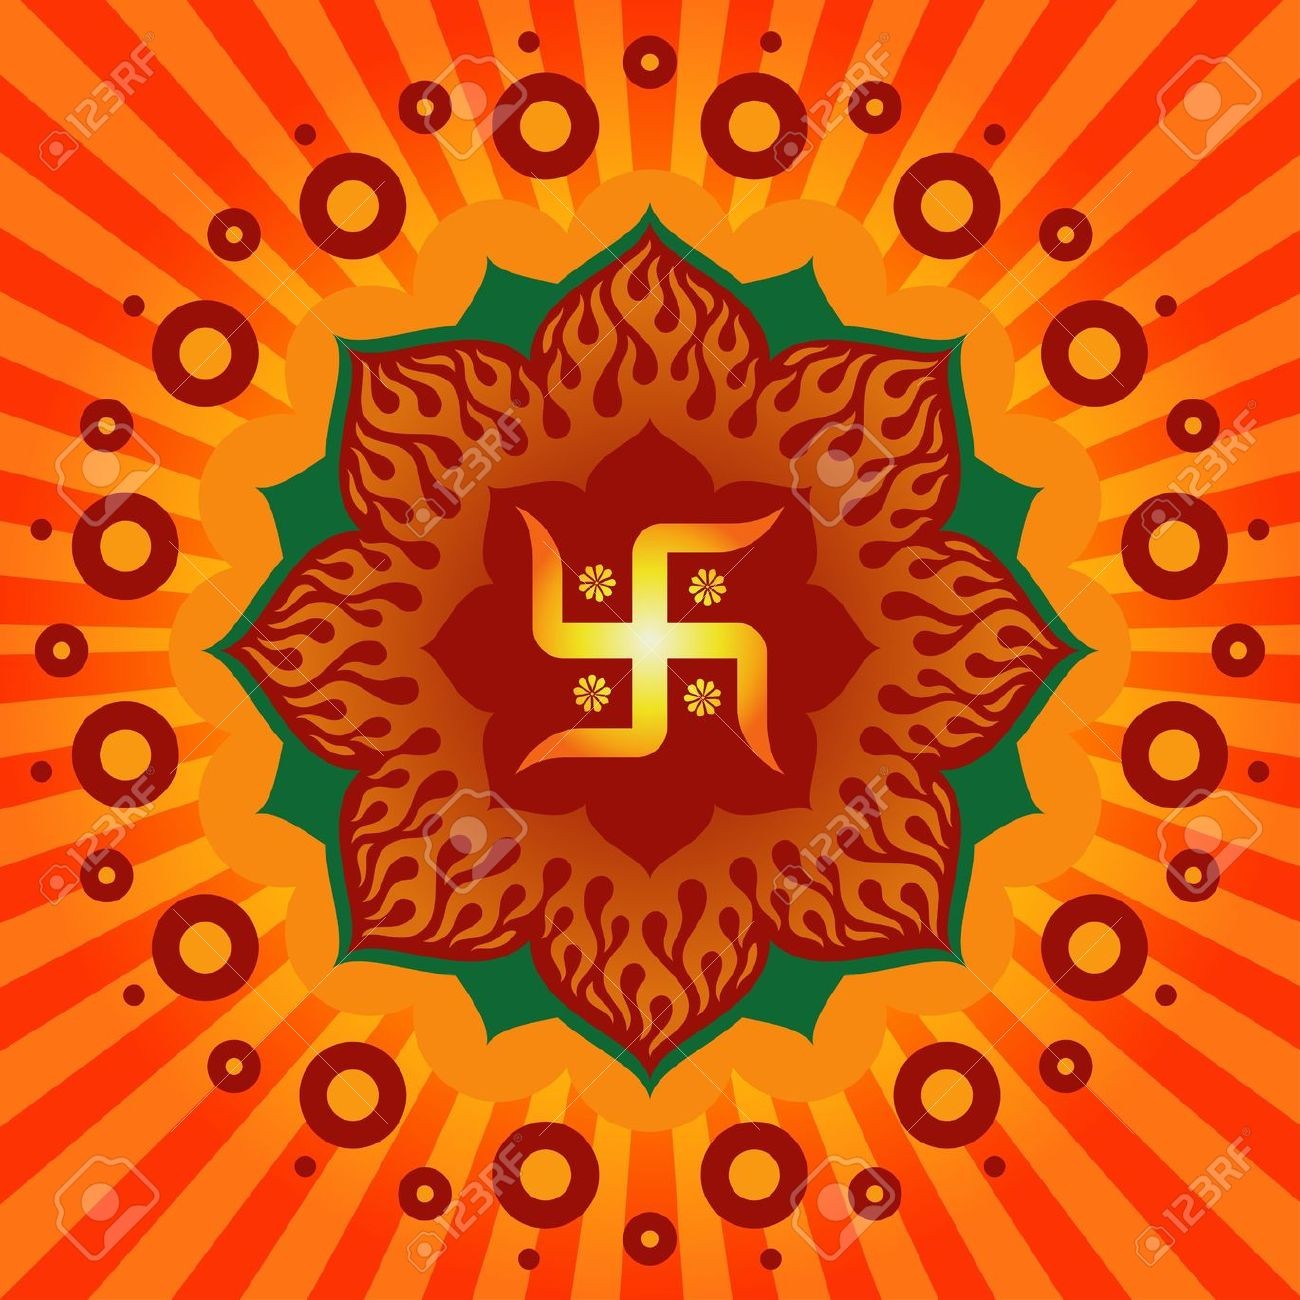 Hindu Symbol Swastik Wallpapers Desktop Images Best Hd Backgrounds Download free photo of hindu auspicious symbol called swastika or swastik. hindu symbol swastik wallpapers